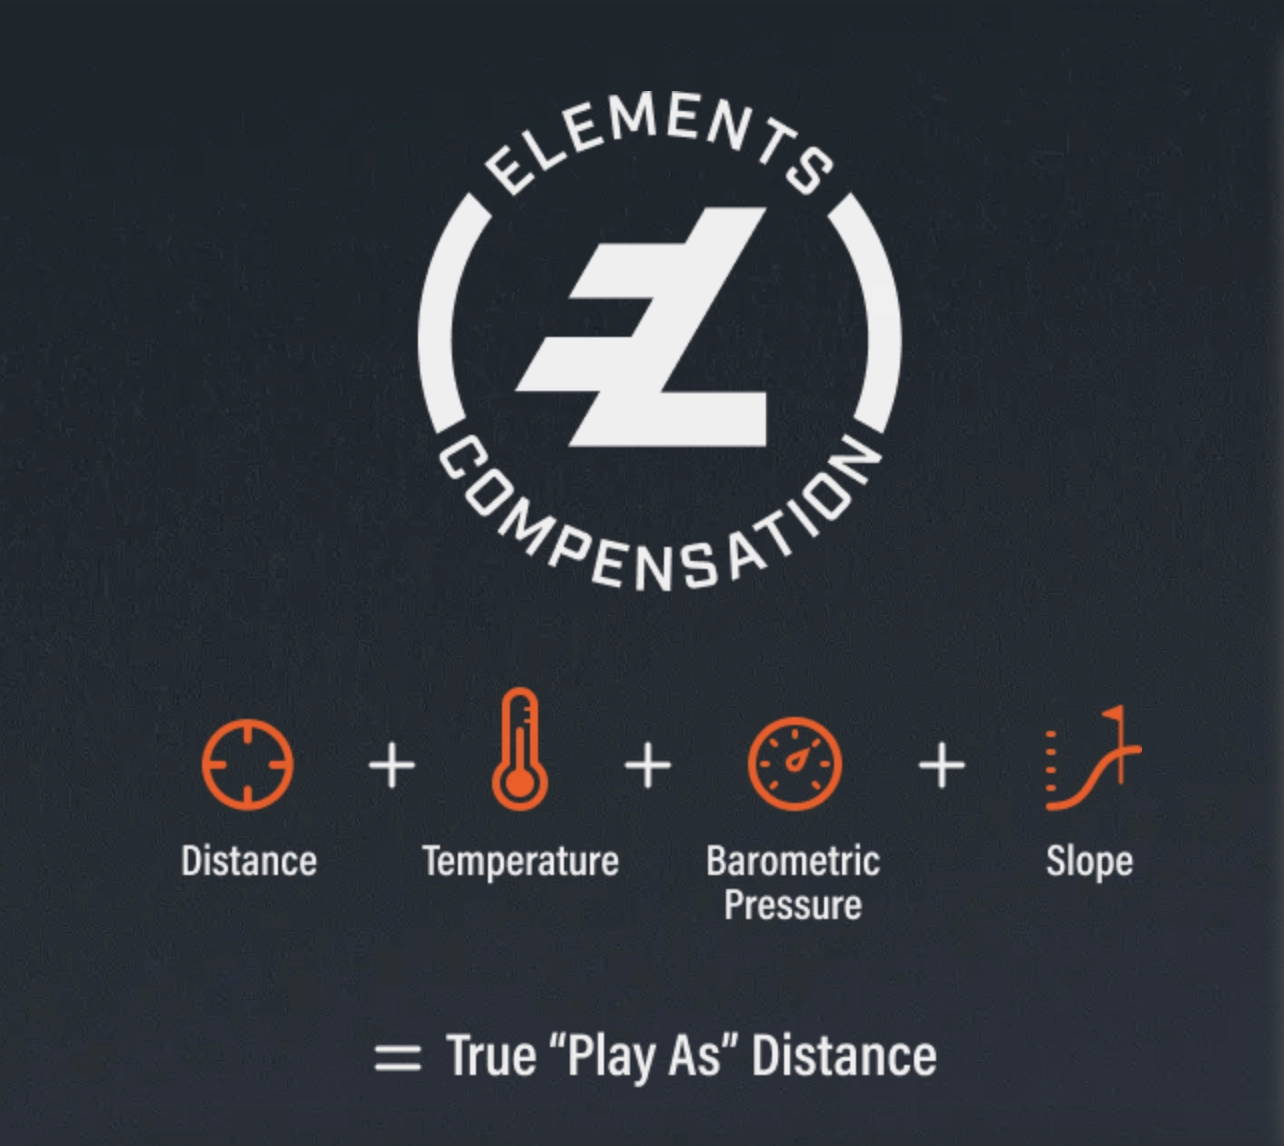 An illustration showing Bushnell's Elements Compensation Slope Technology equation